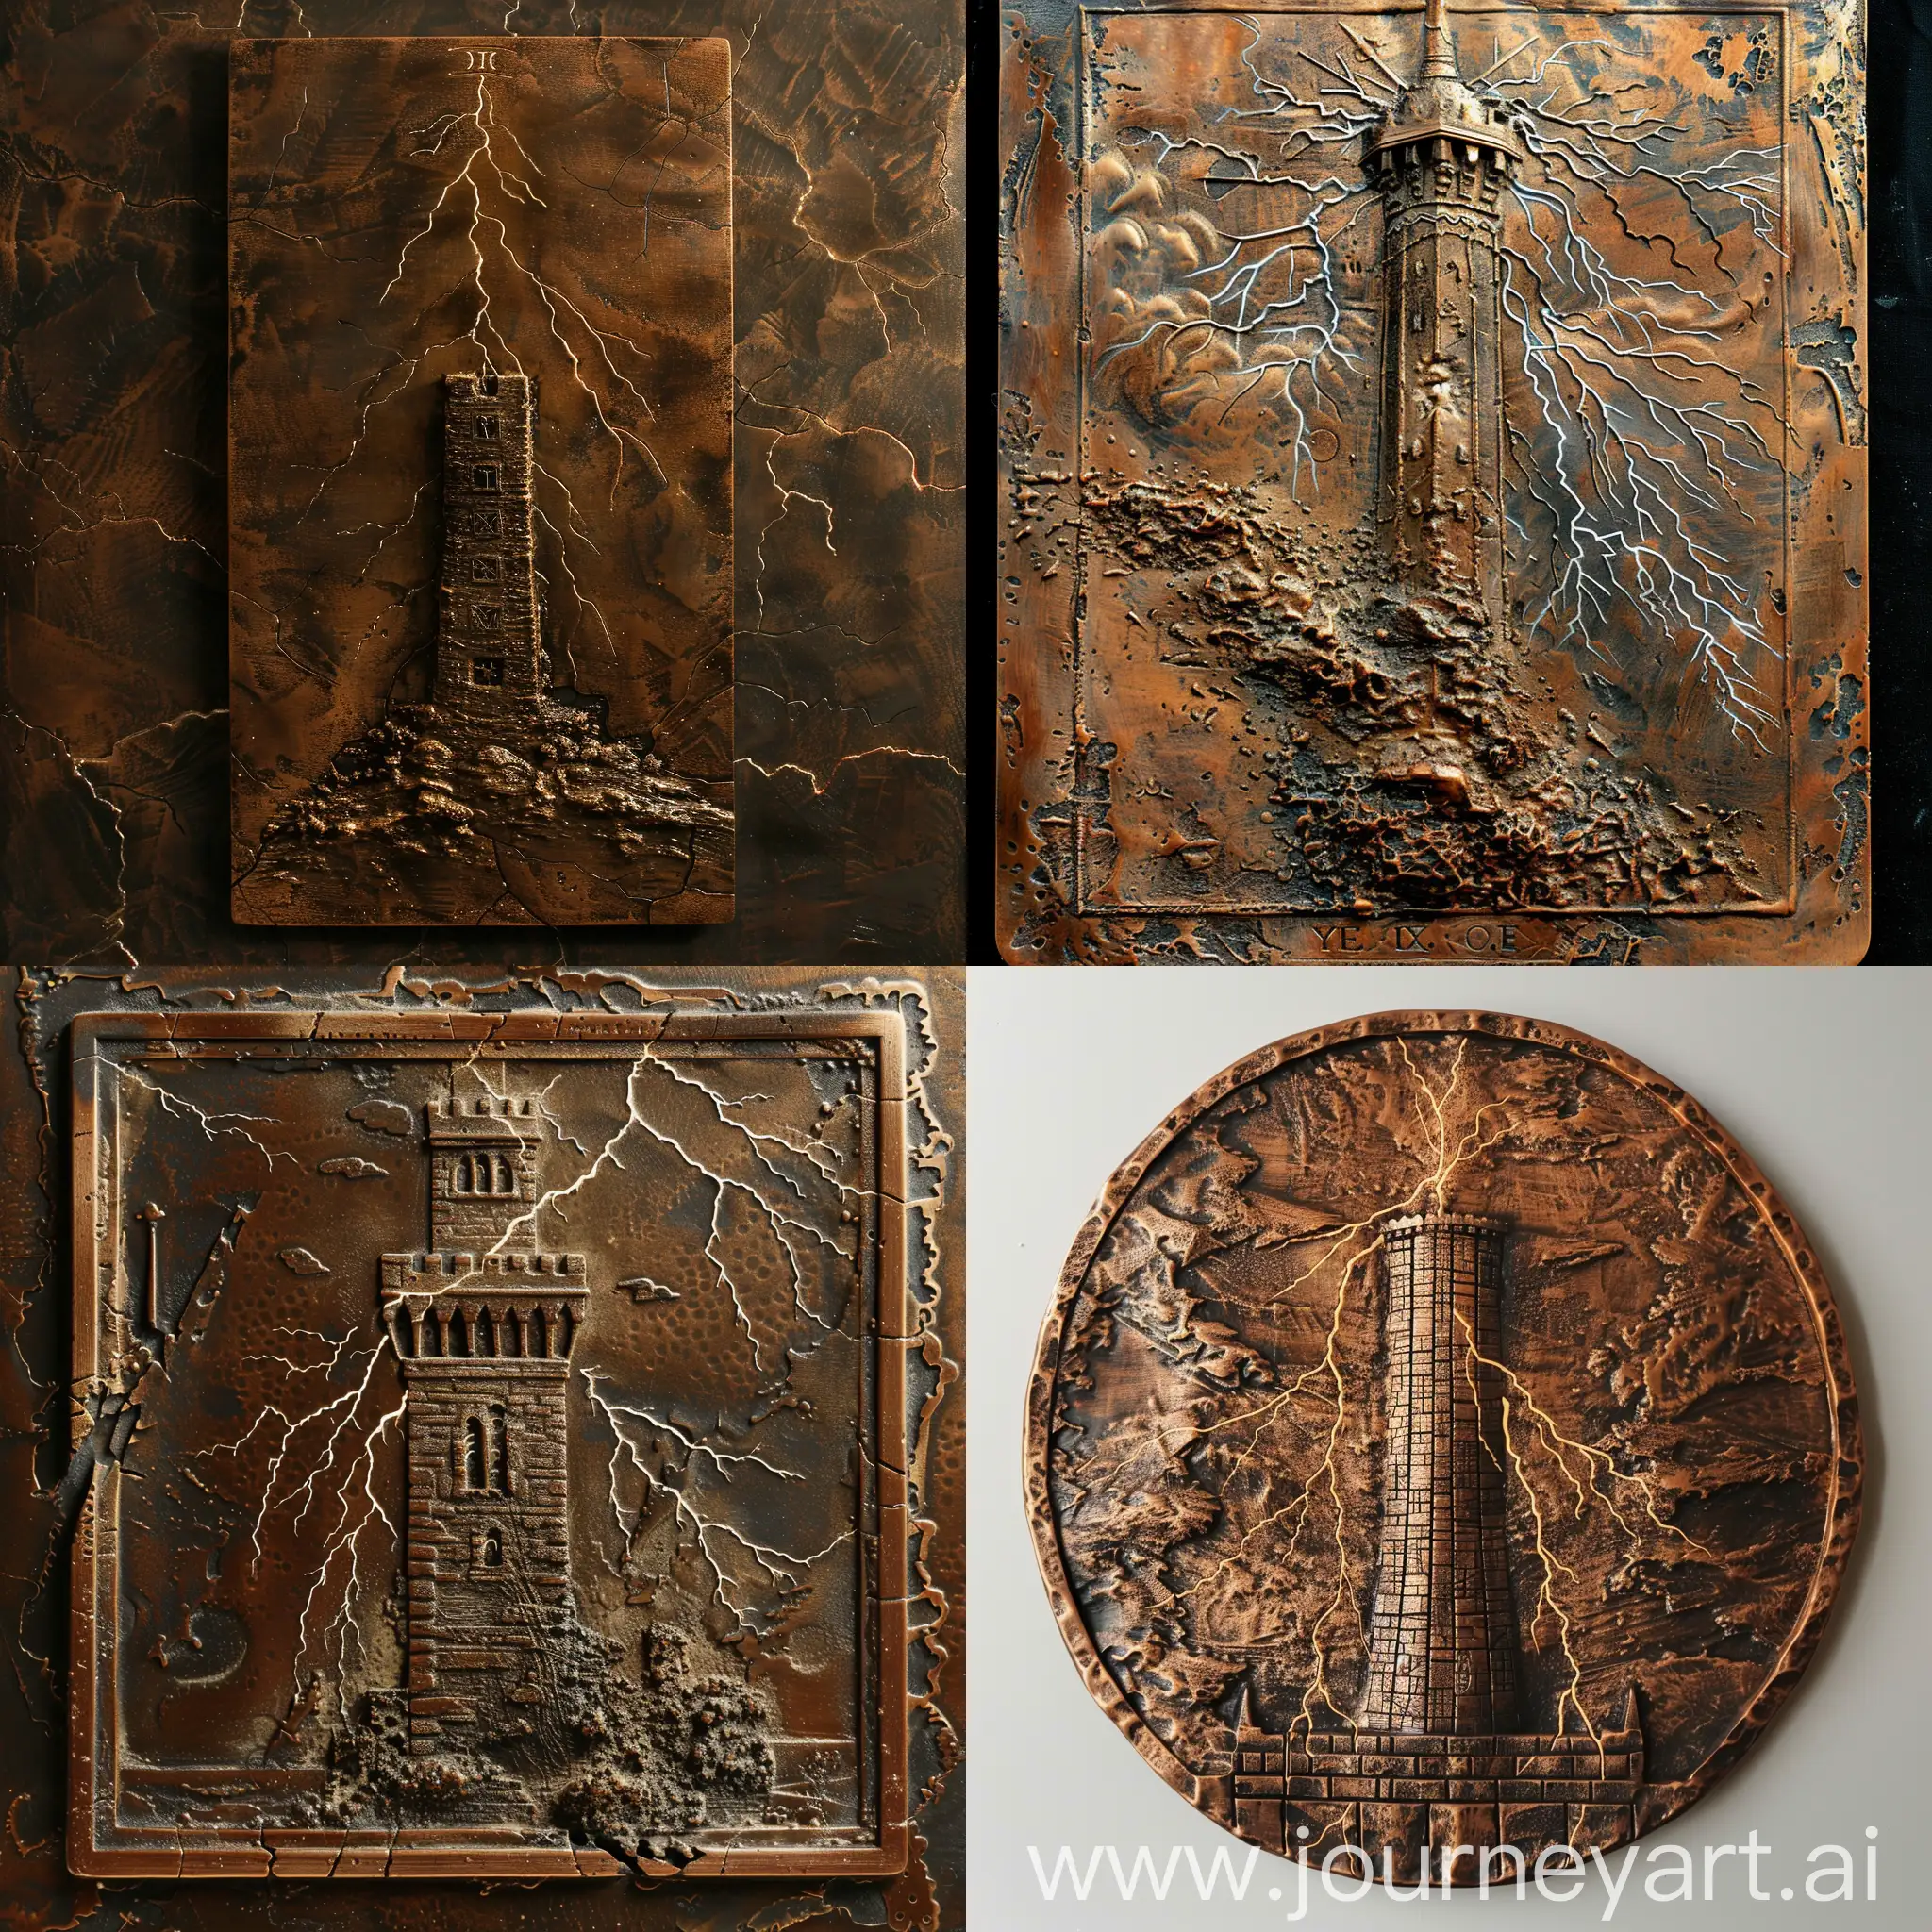 AwardWinning-Italian-Tarot-Tower-Struck-by-Lightning-Minimalistic-Symbolism-on-Copper-Plate